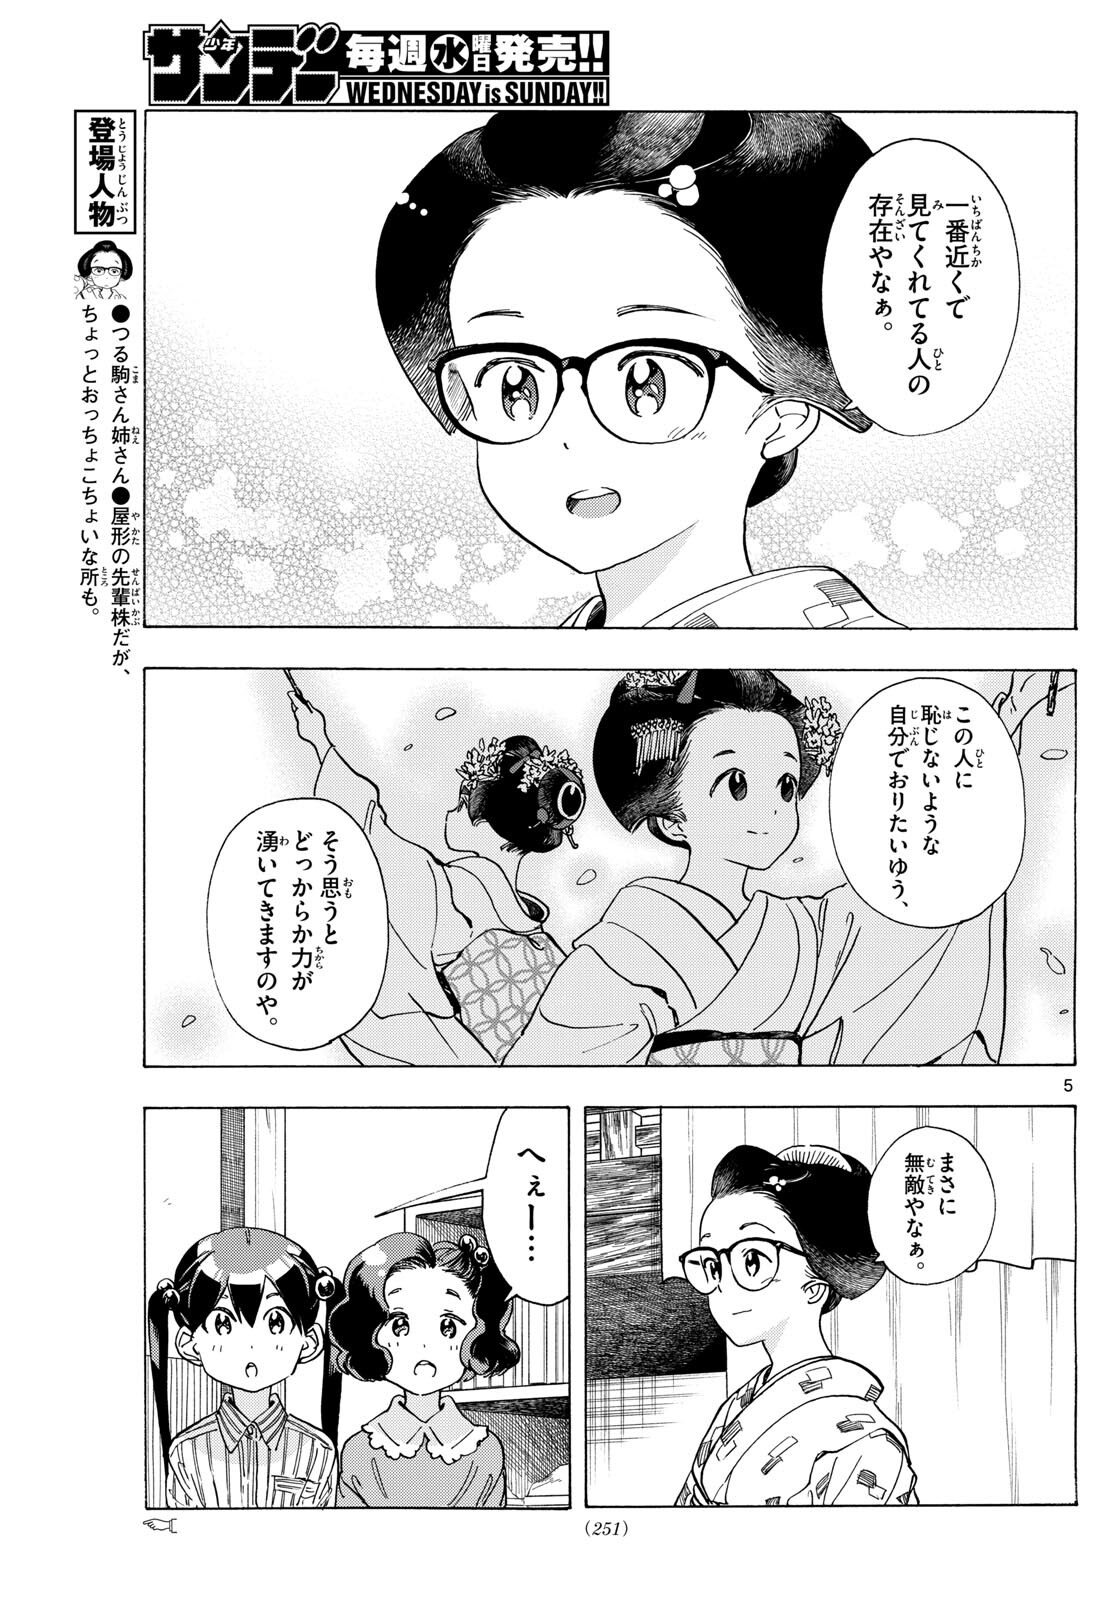 Maiko-san Chi no Makanai-san - Chapter 291 - Page 5